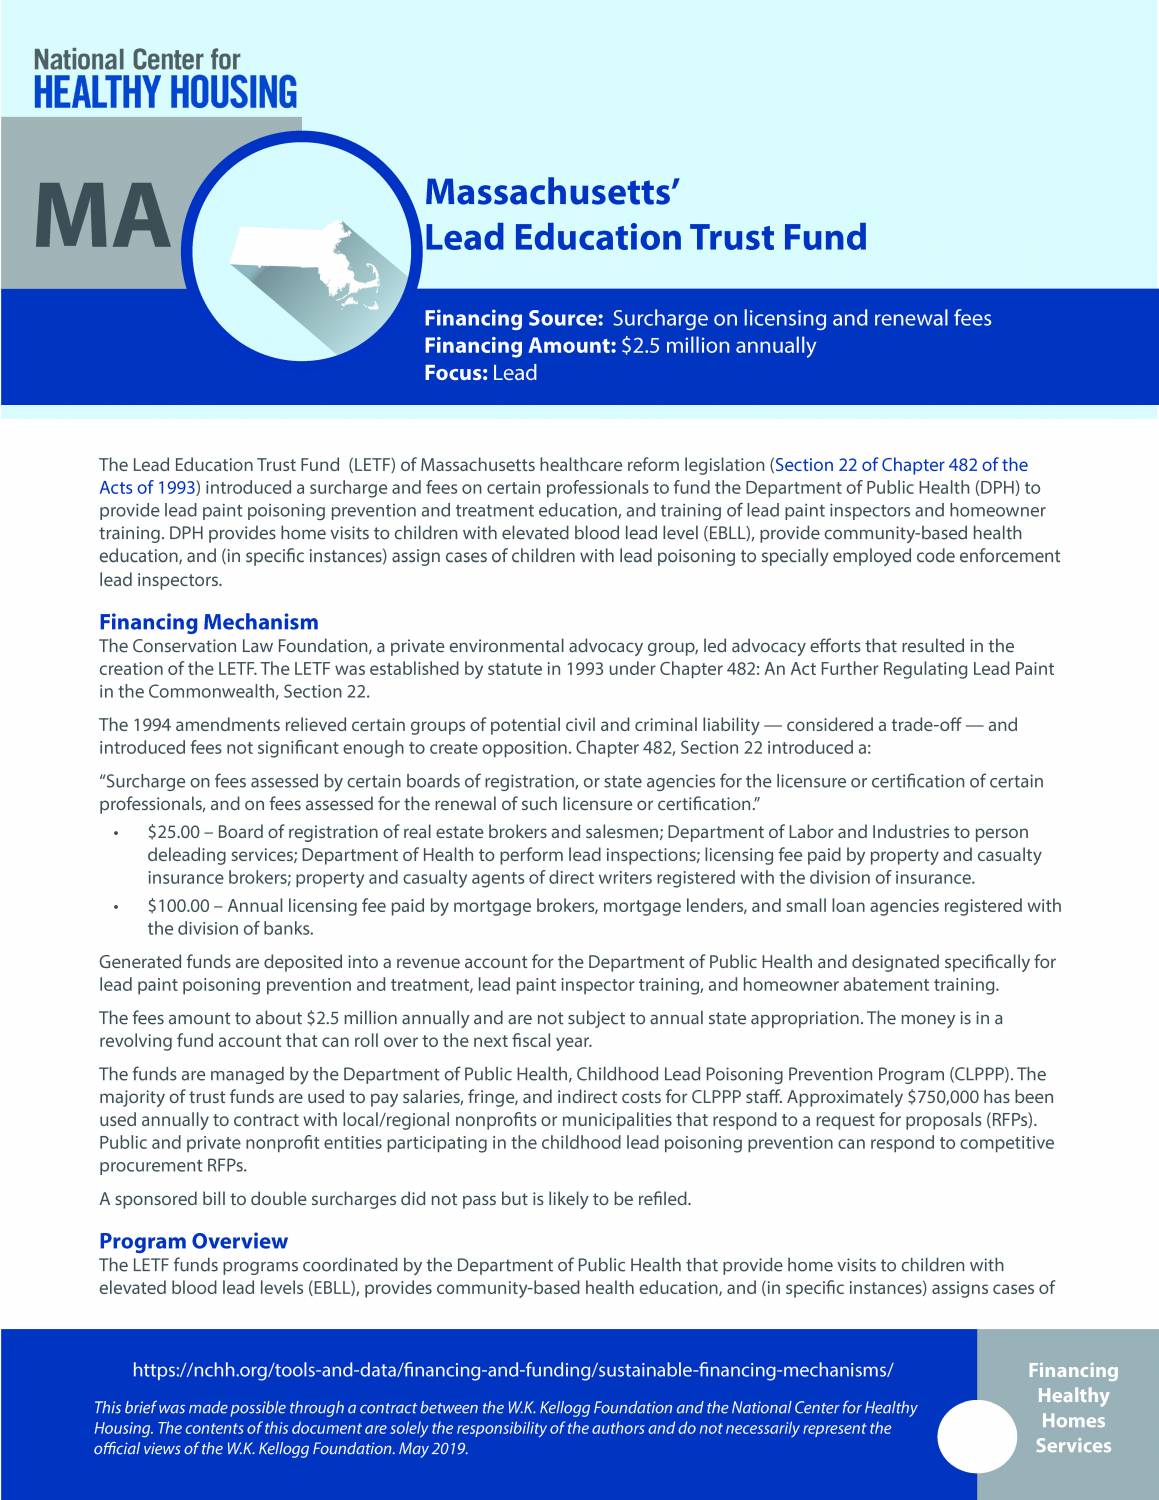 Sustainable Financing Mechanisms: Massachusetts' Lead Education Trust Fund